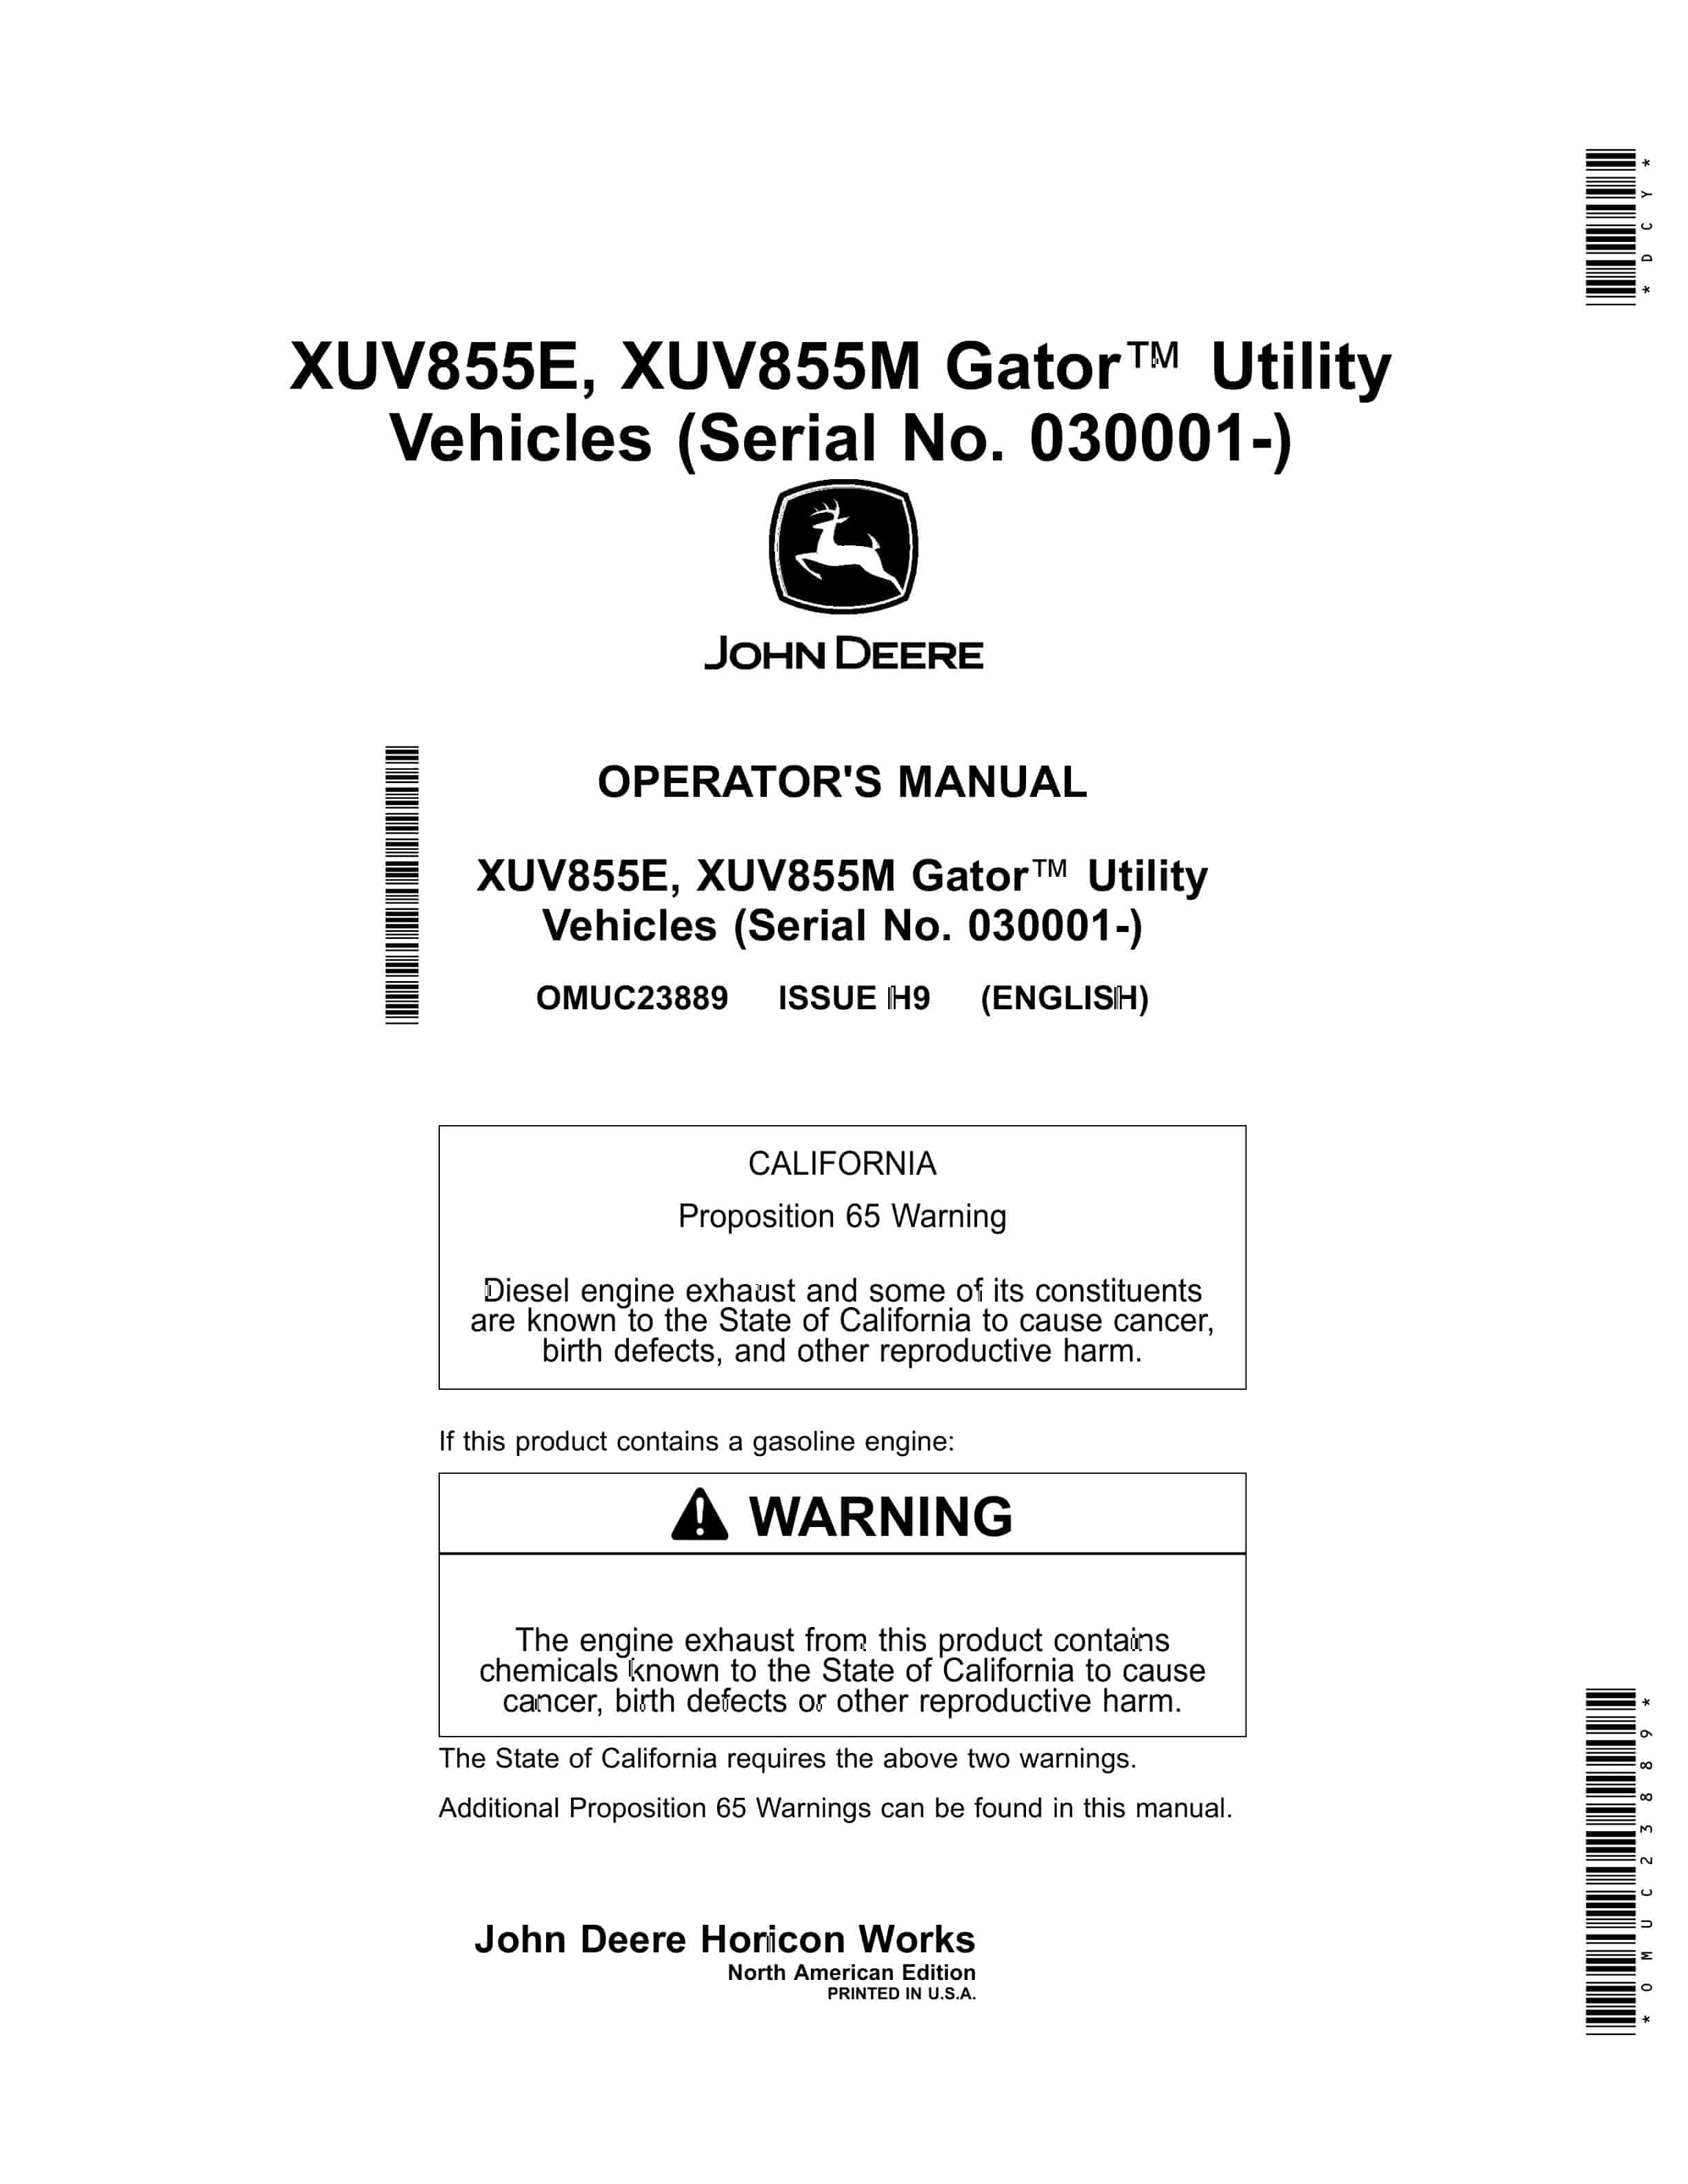 John Deere XUV855E XUV855M Gator Utility Vehicles Operator Manual OMUC23889 1